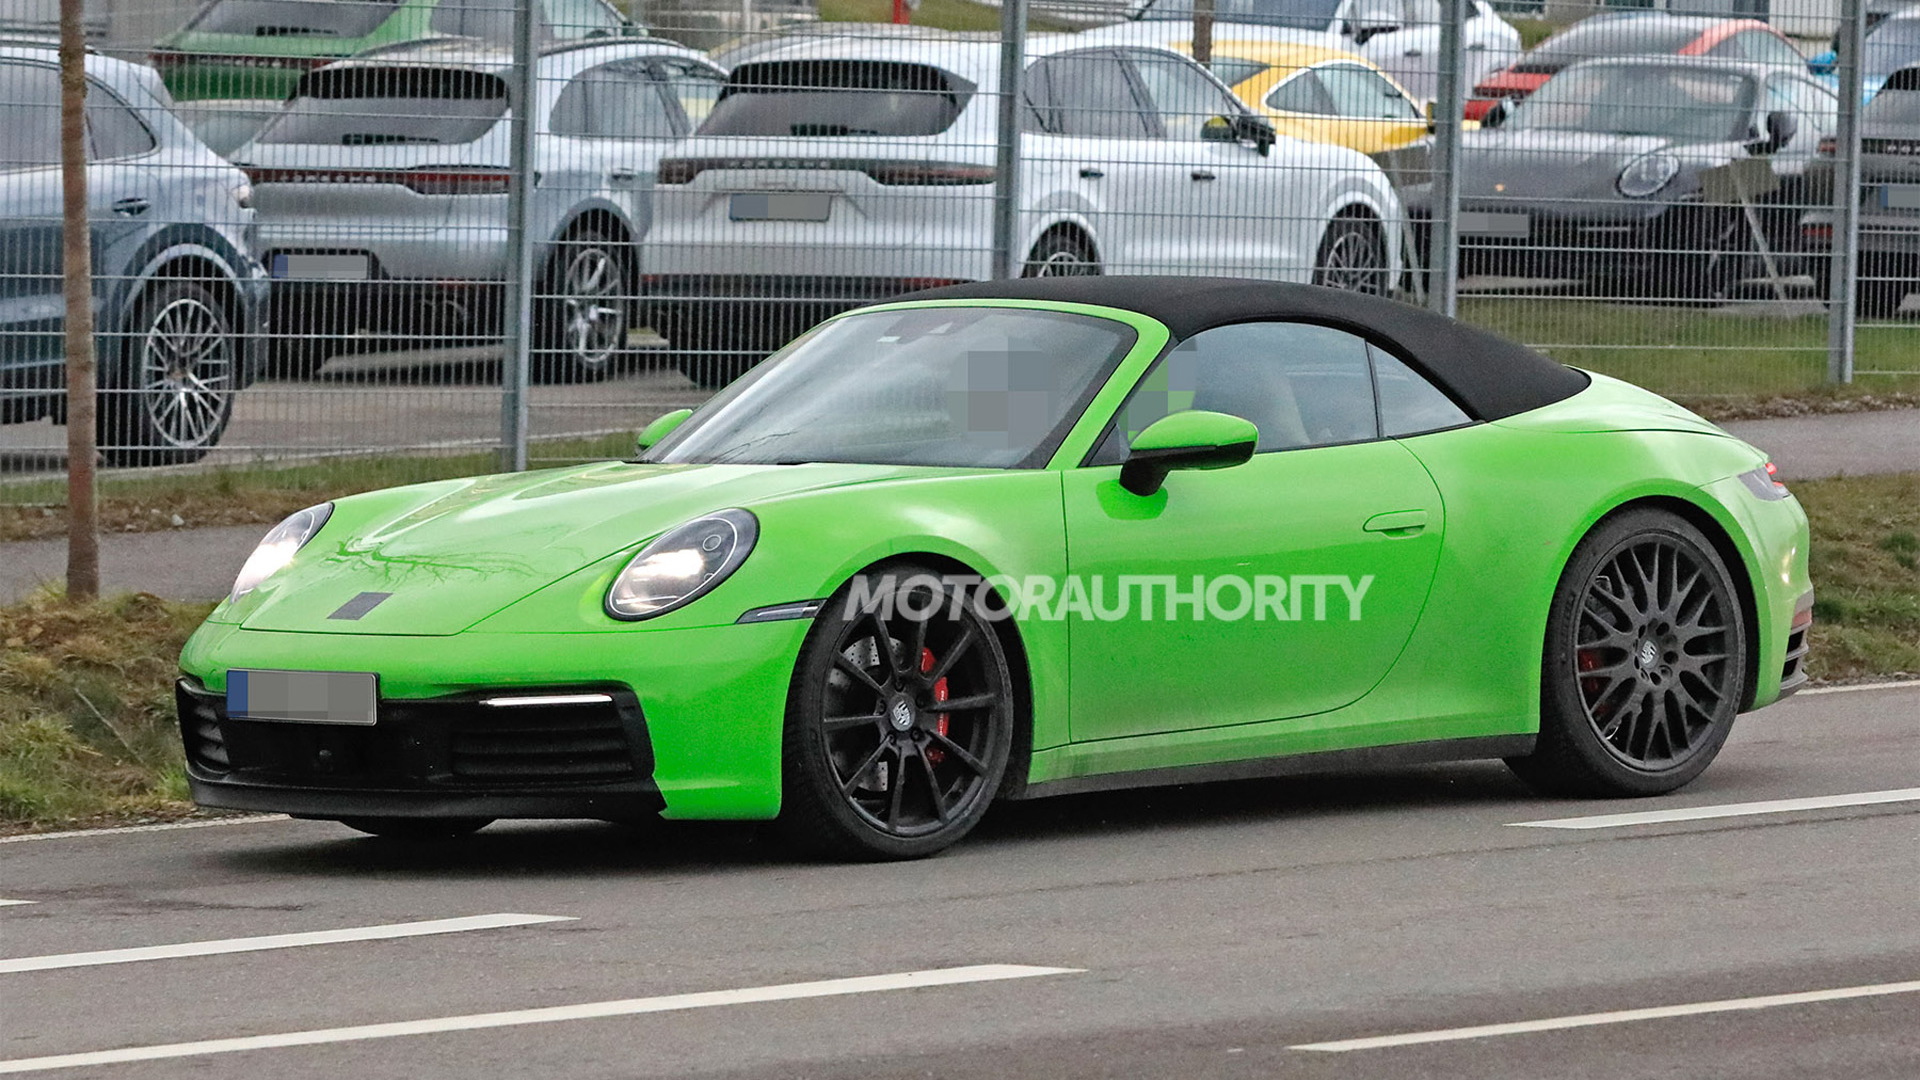 2020 Porsche 911 Cabriolet spy shots - Image via S. Baldauf/SB-Medien